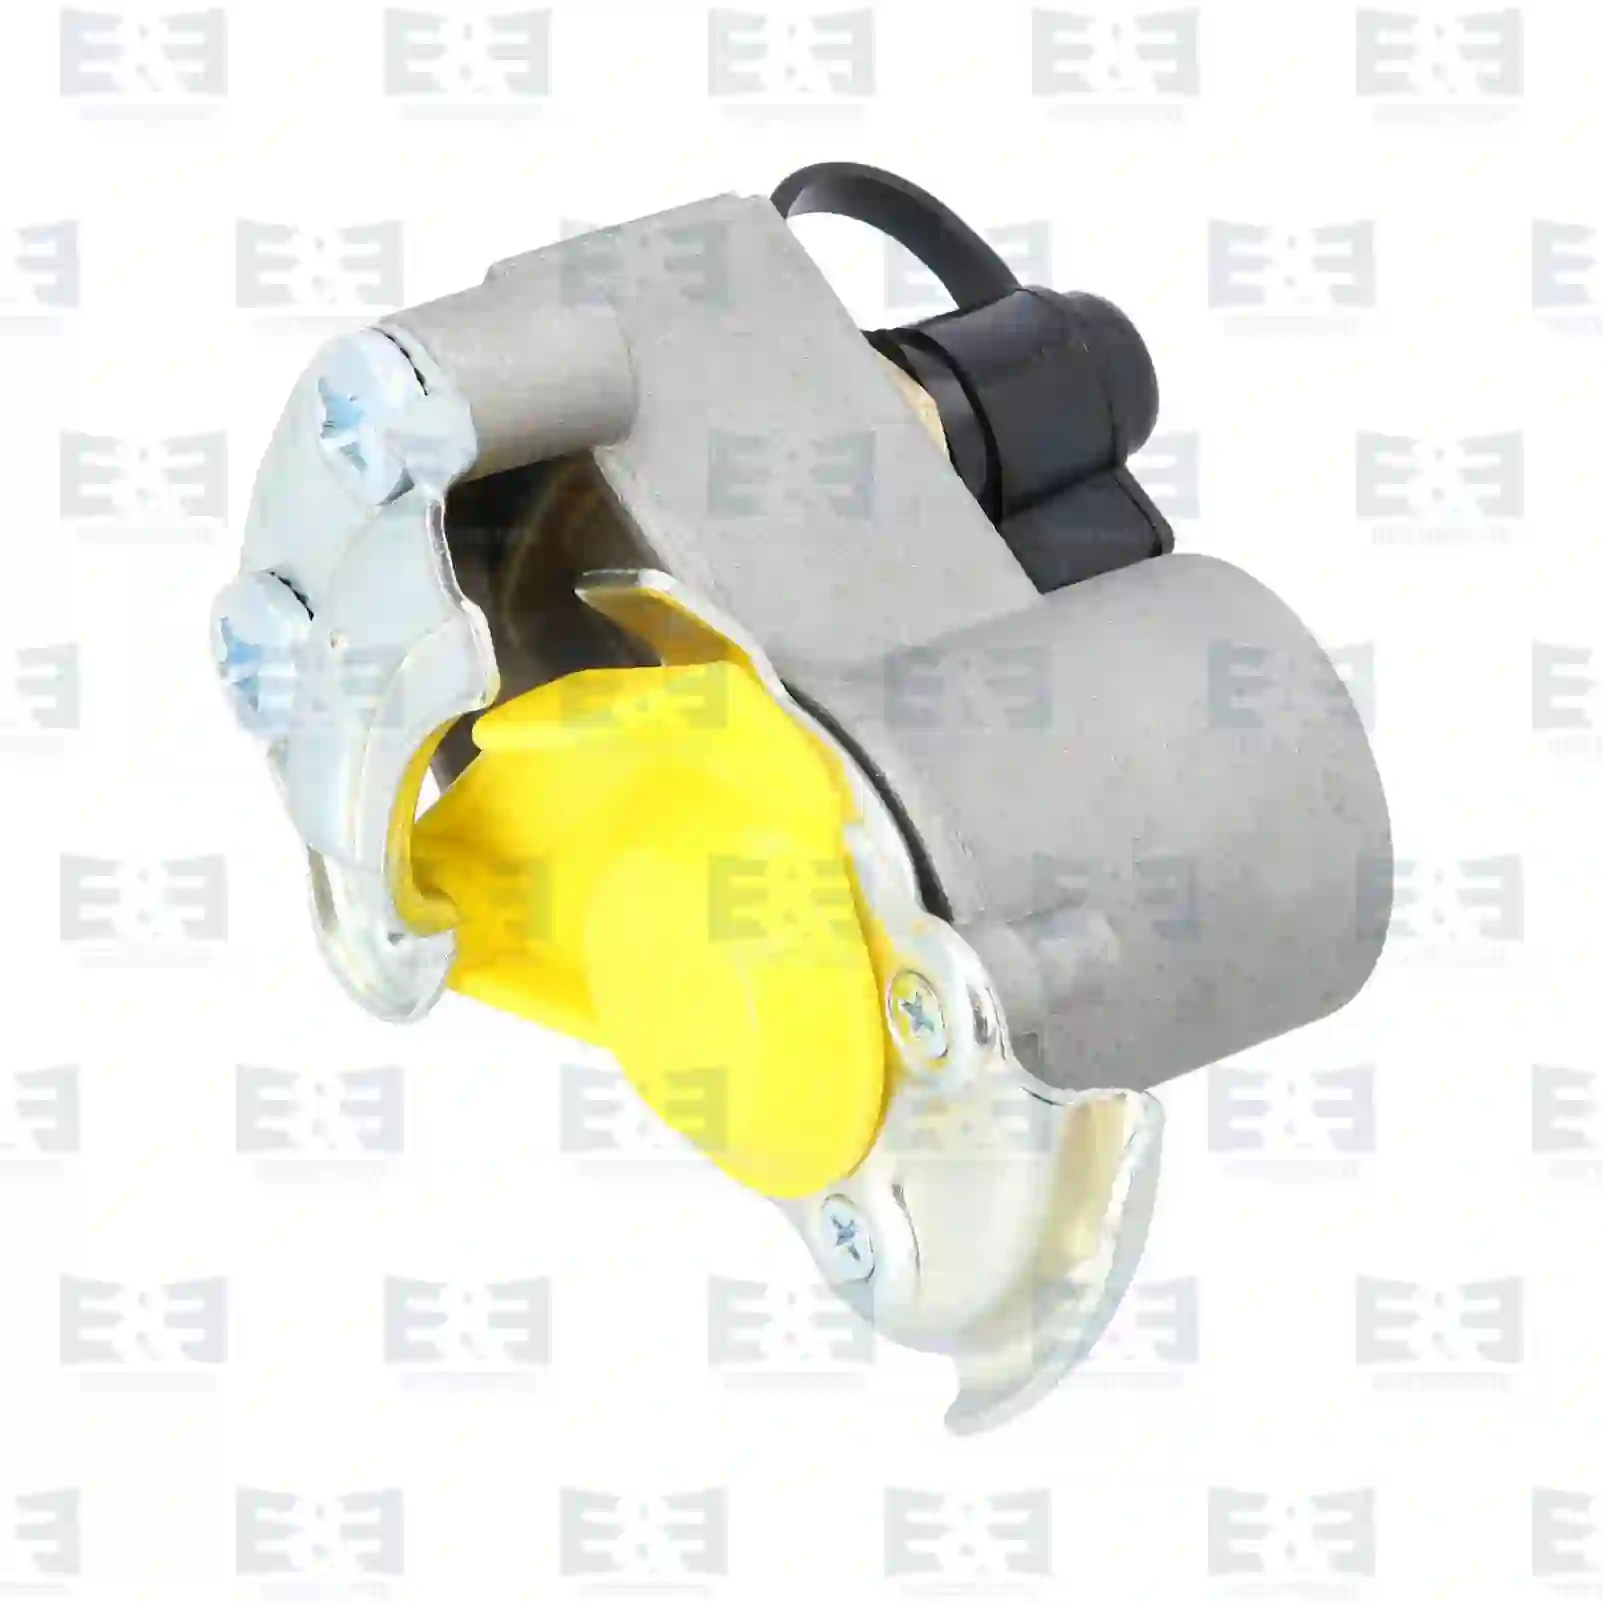  Palm coupling, test connector, yellow lid || E&E Truck Spare Parts | Truck Spare Parts, Auotomotive Spare Parts